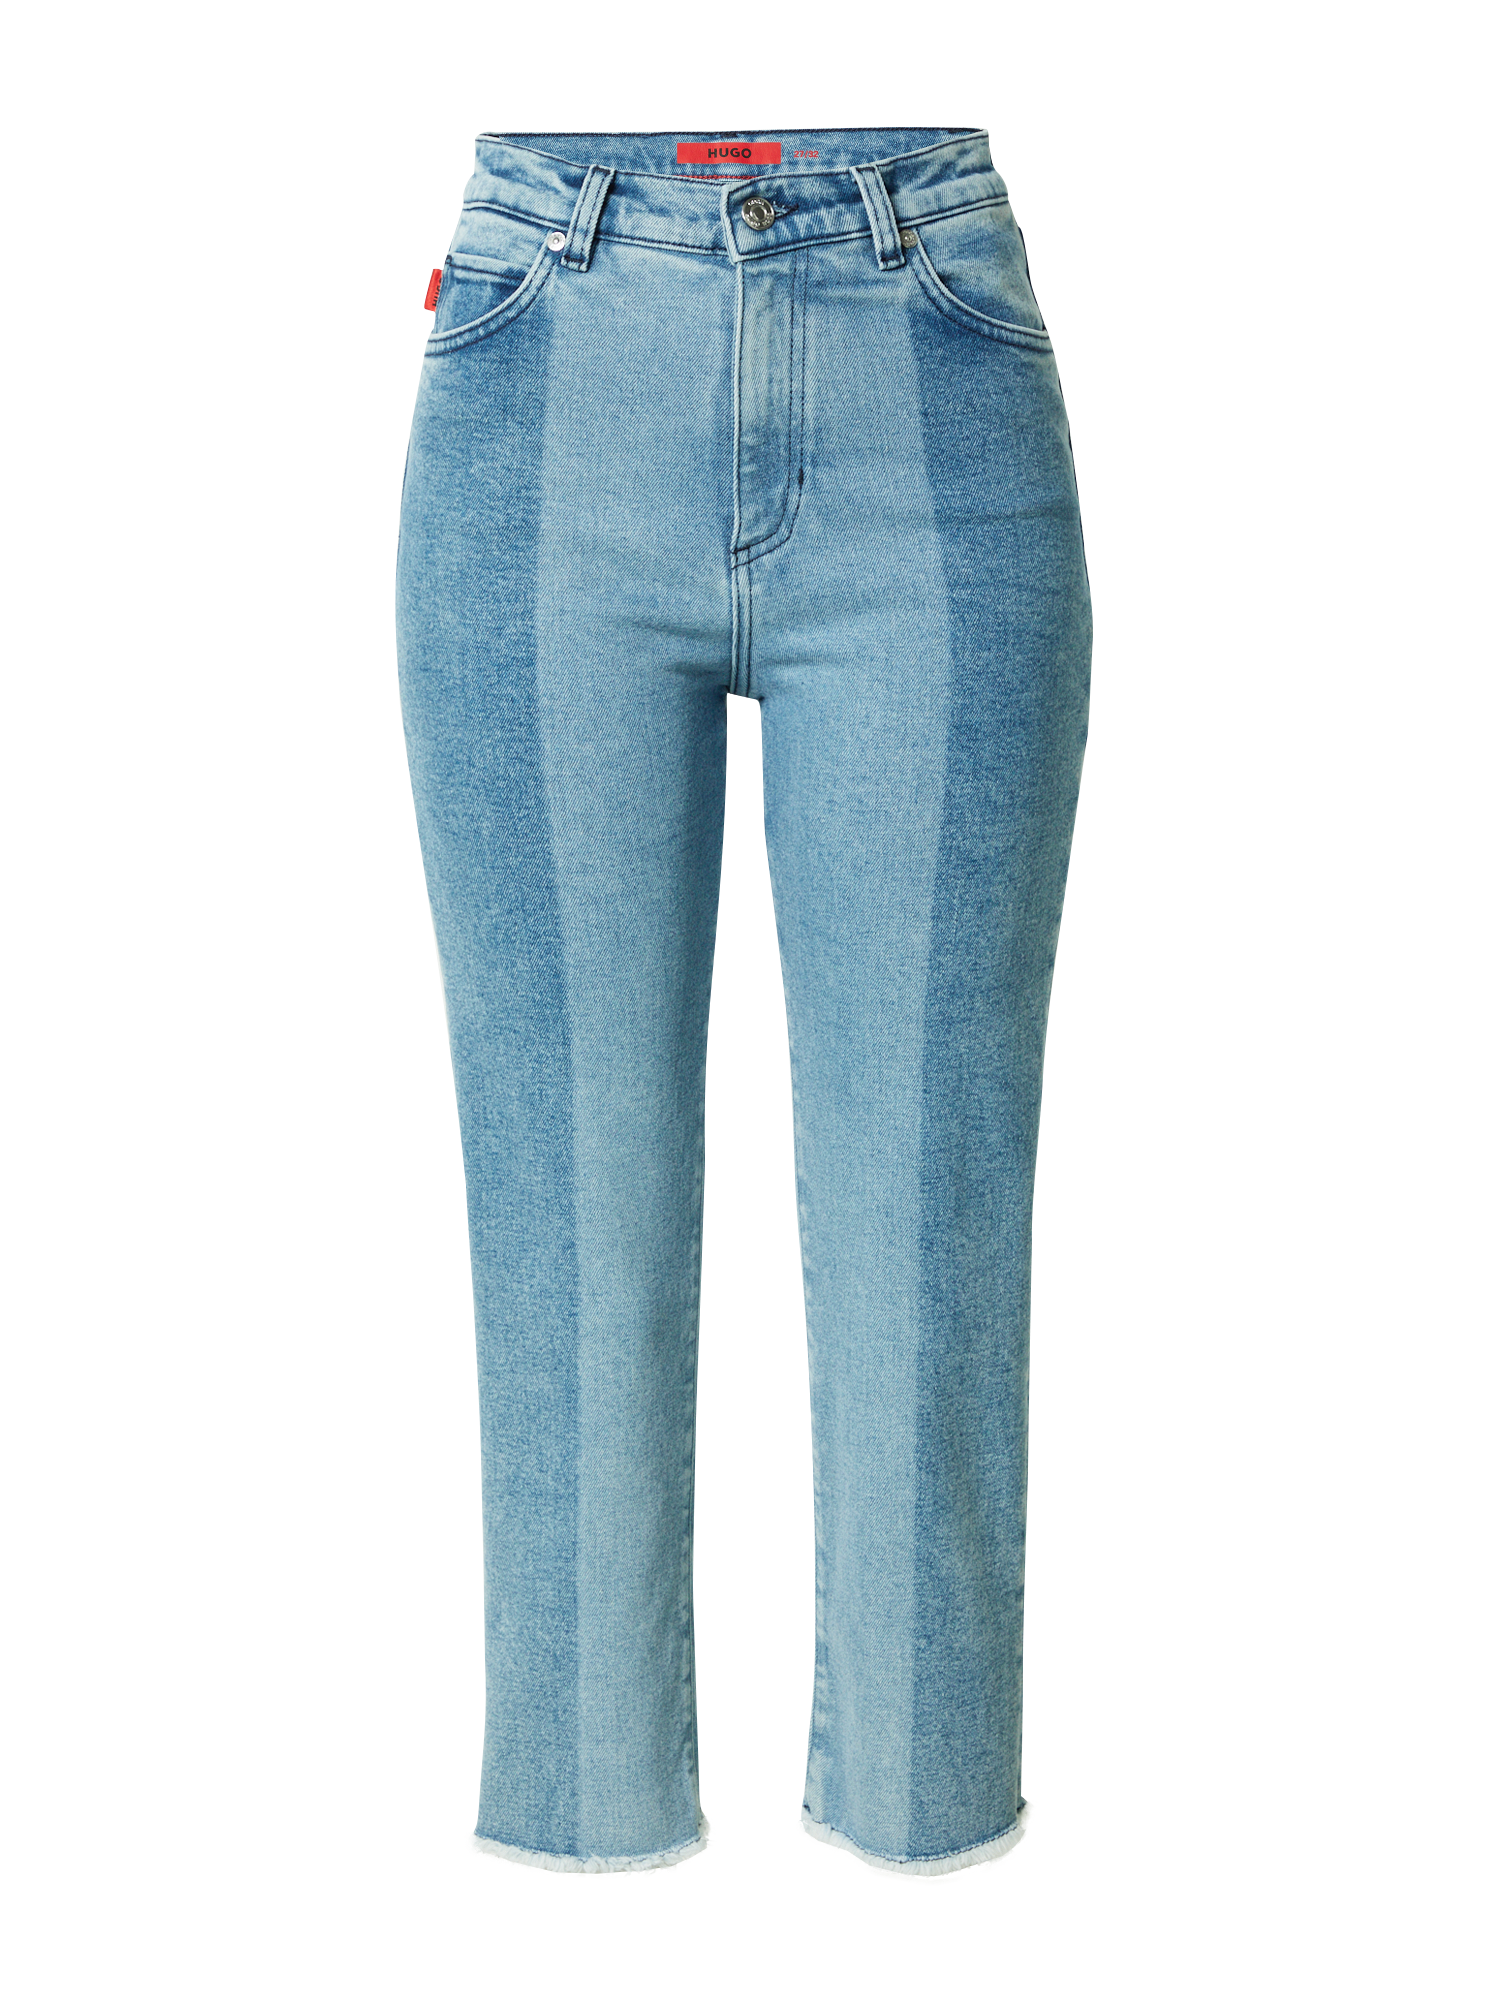 Nuovi arrivi Donna HUGO Jeans Gayang in Blu 